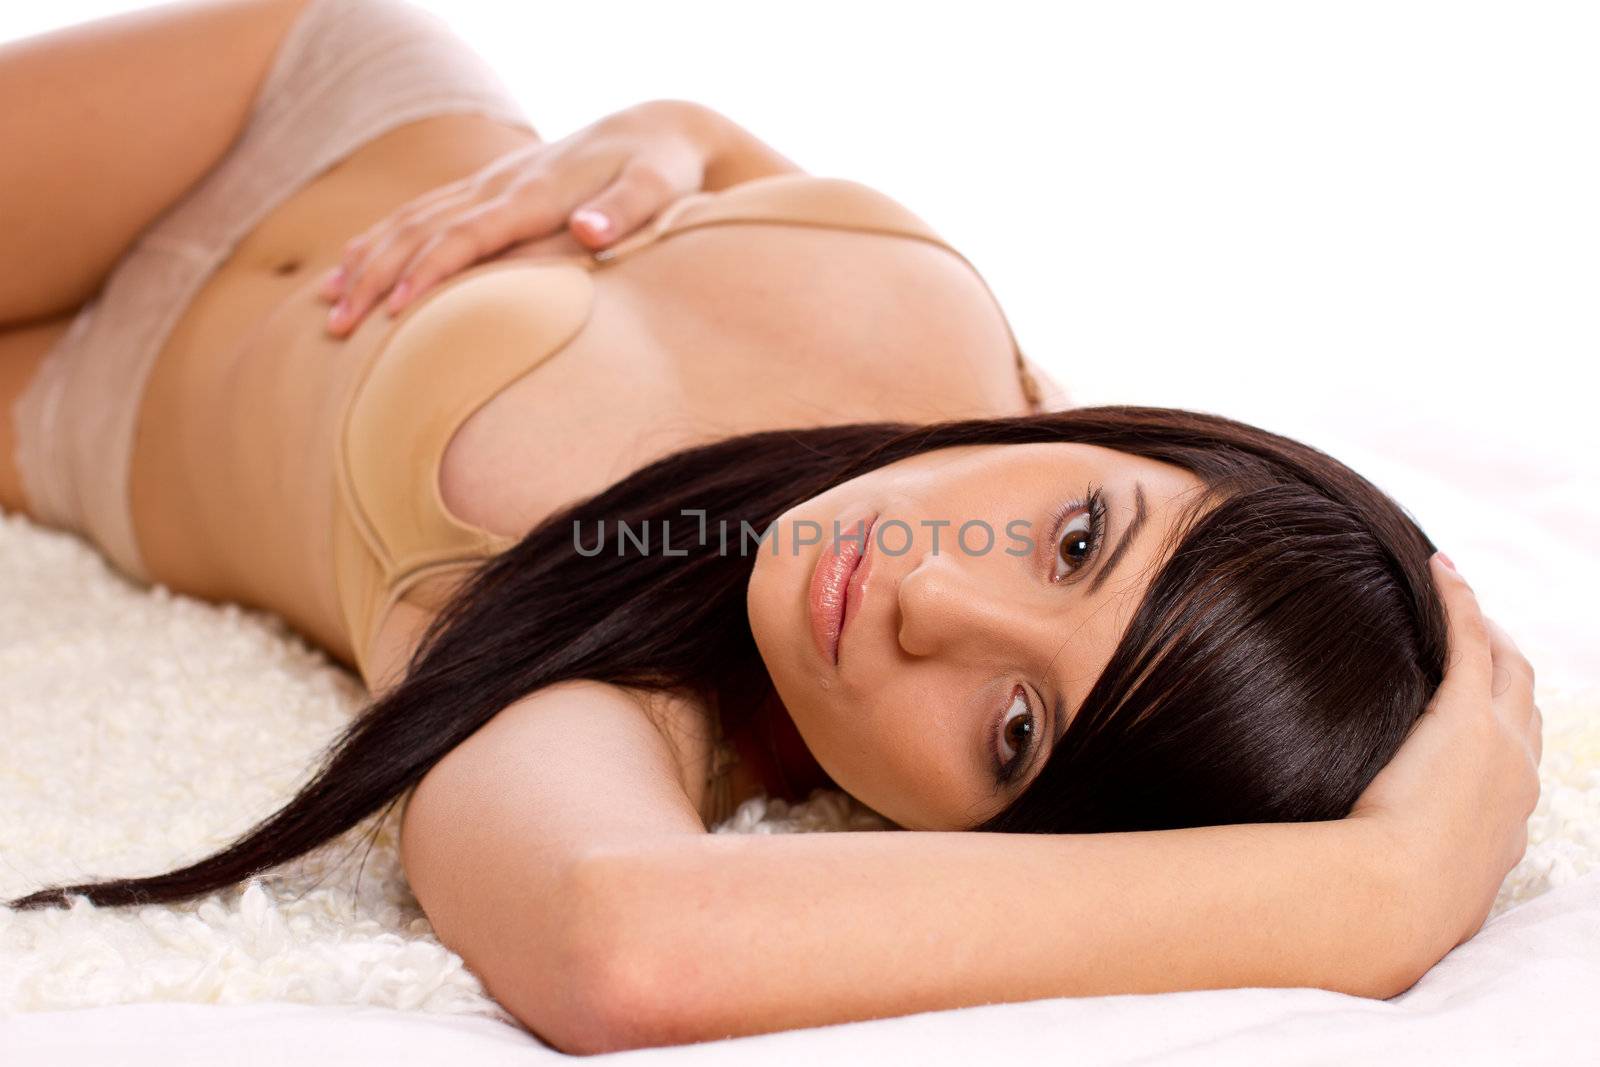 Beautiful fasion model in lingerie in bed by tpfeller